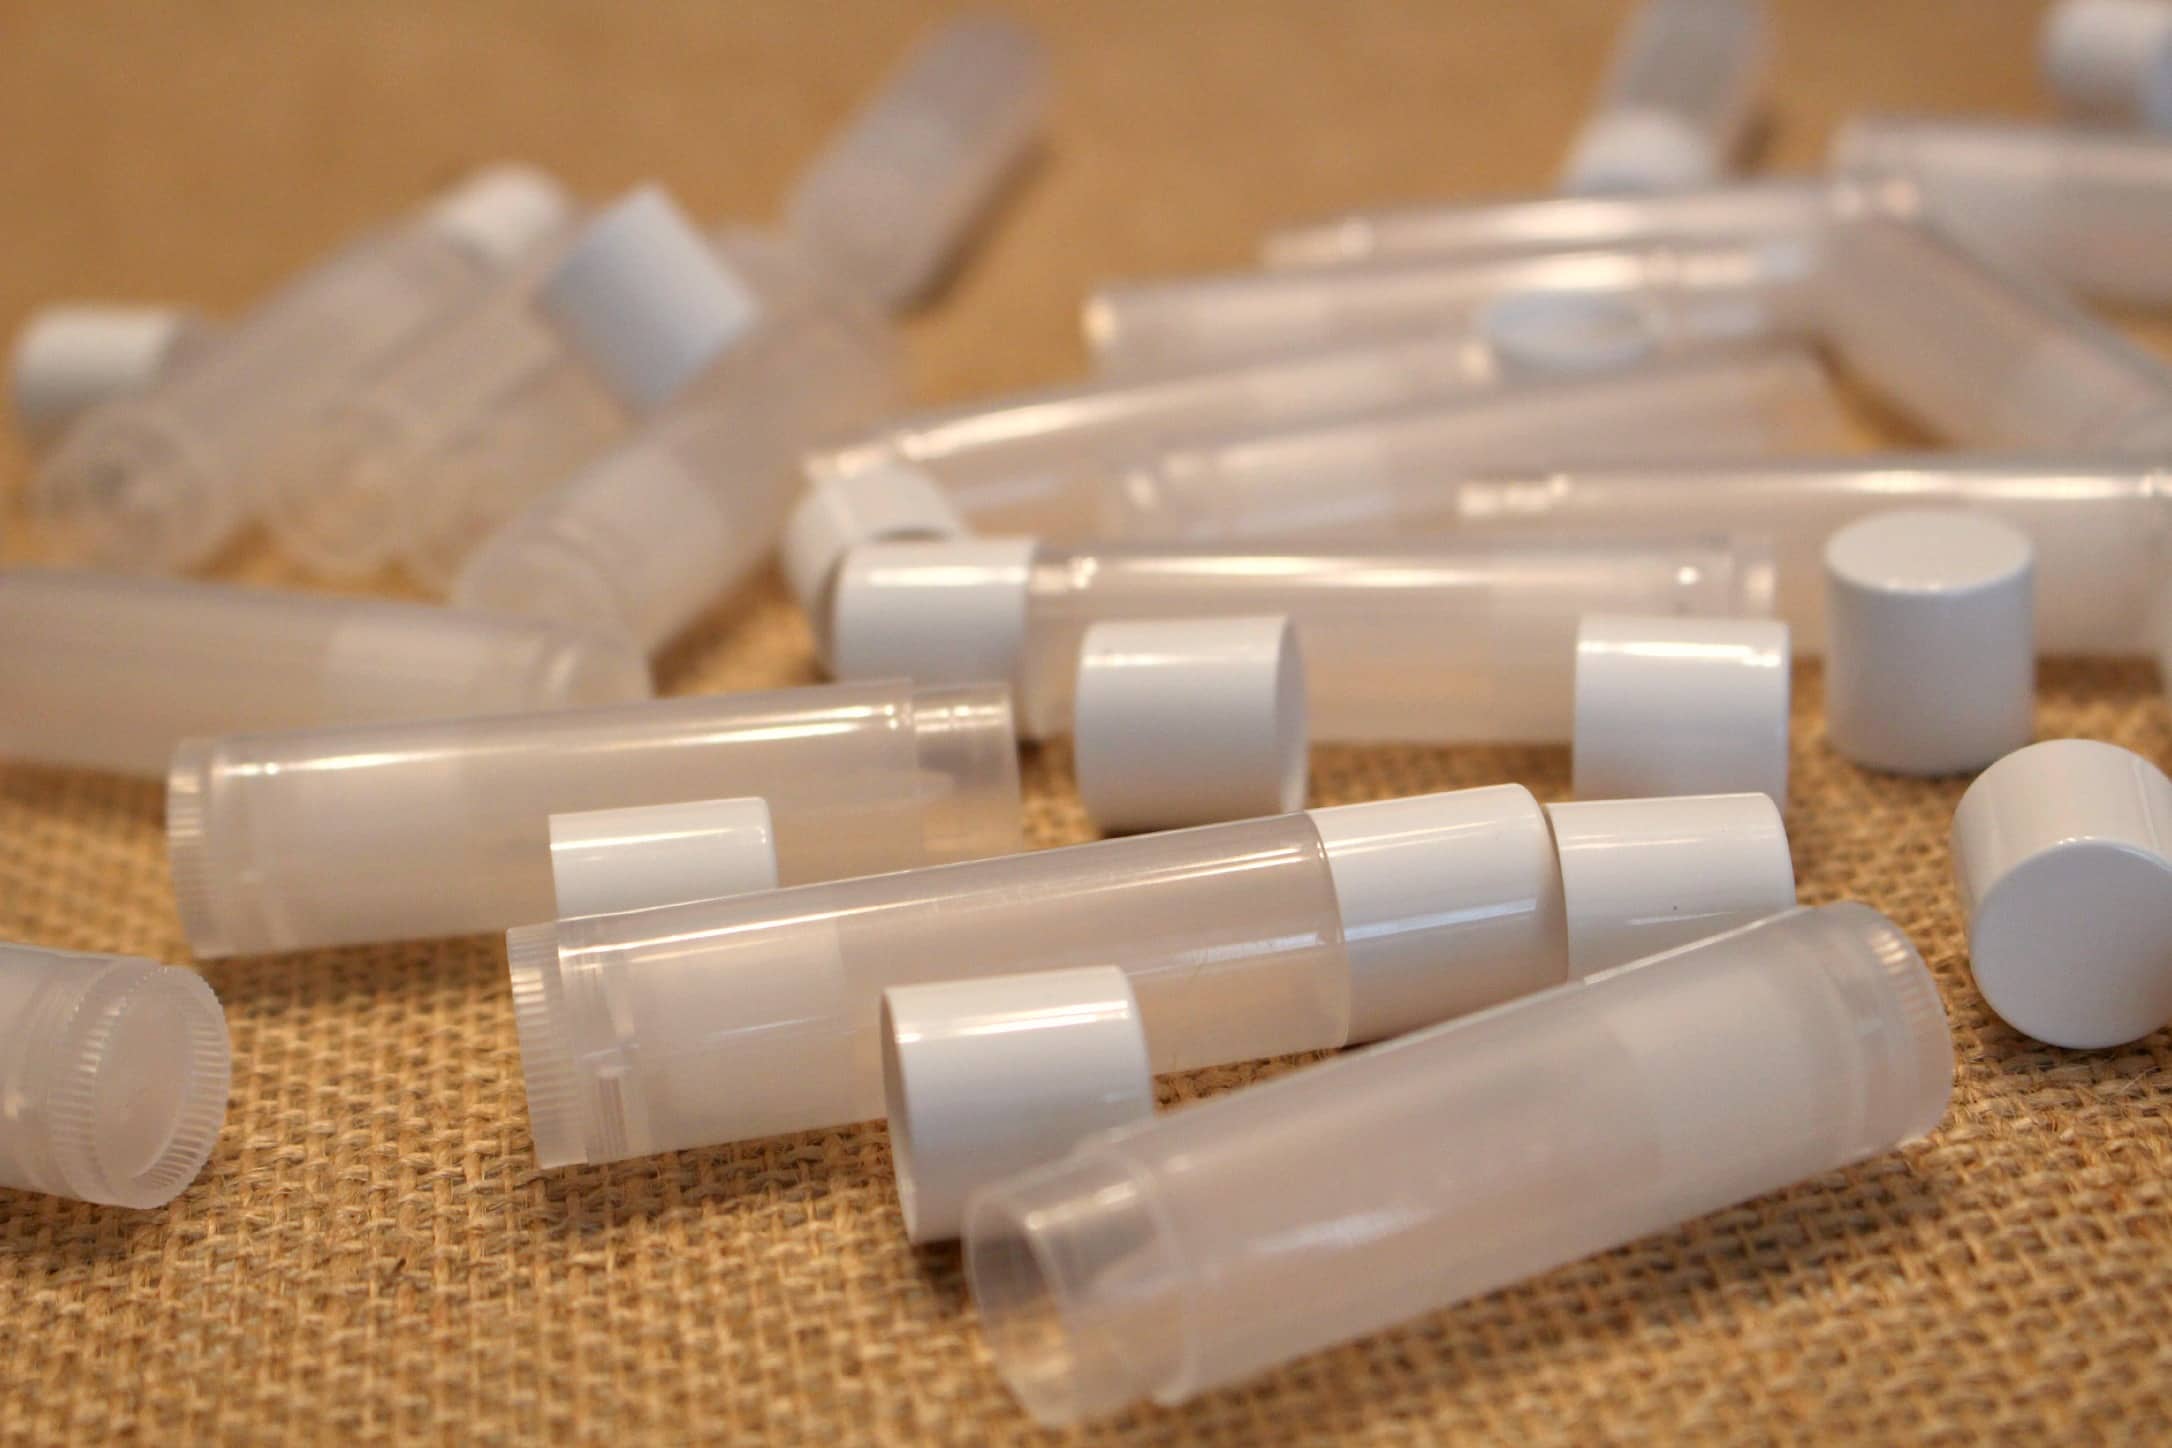 How to Make Lip Balm: Empty tubes for making homemade lip balm